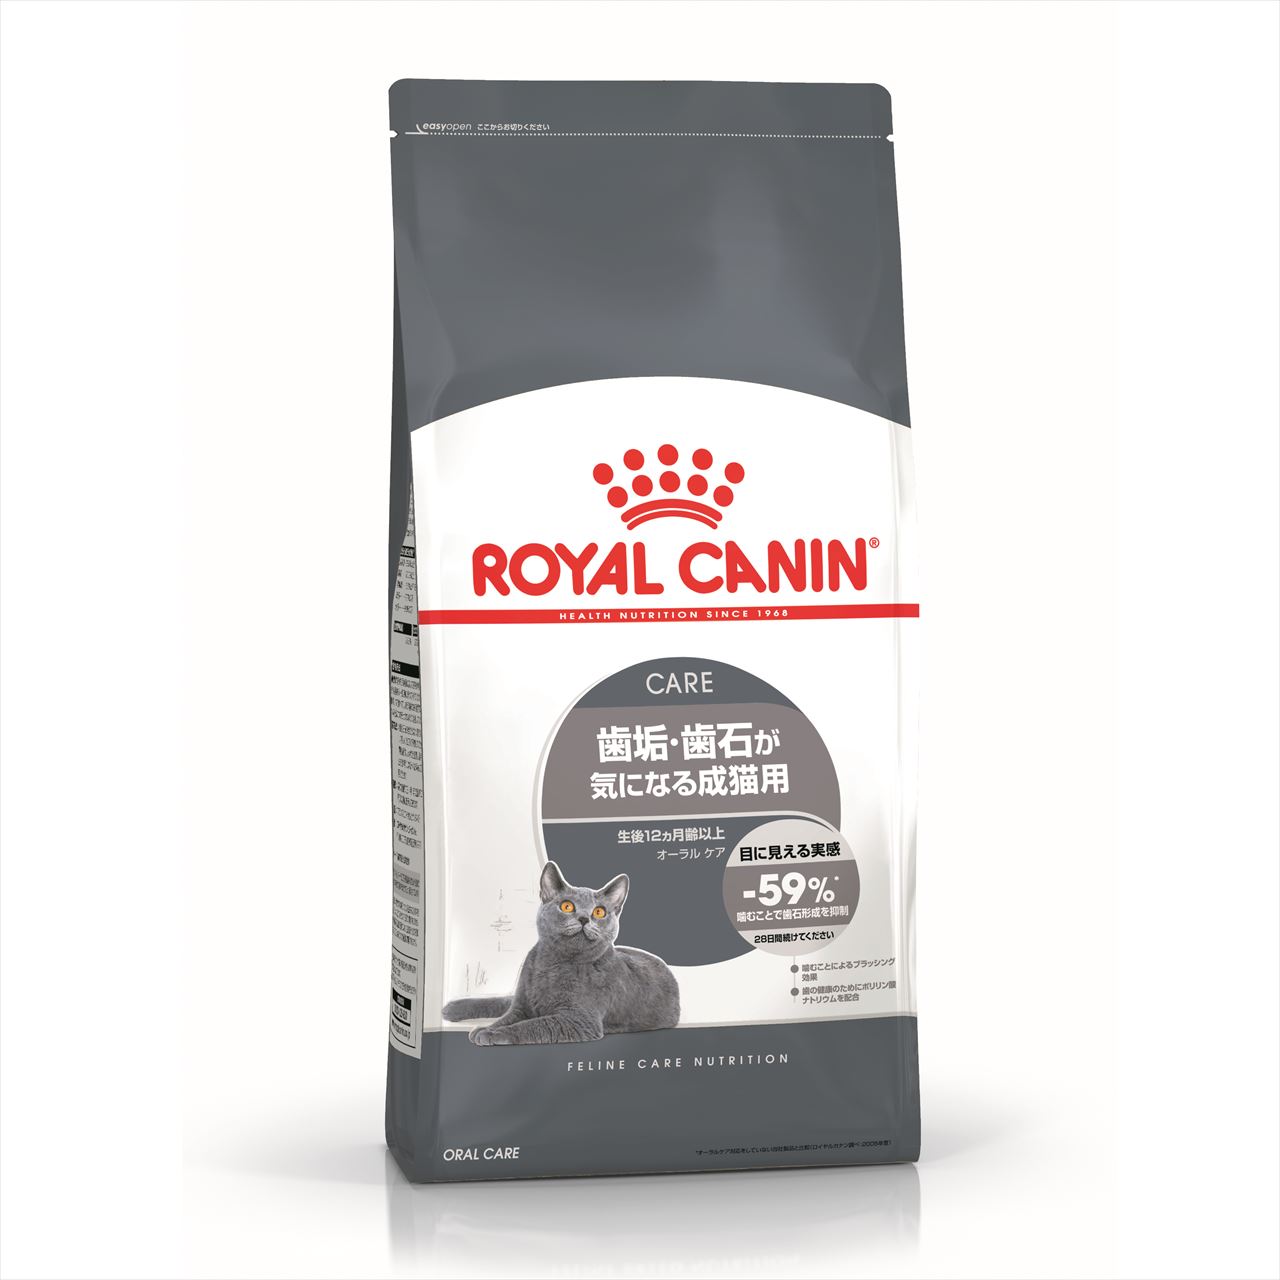 Royal Canin（ロイヤルカナン） | ペット用品・ペットフード卸売サイト 